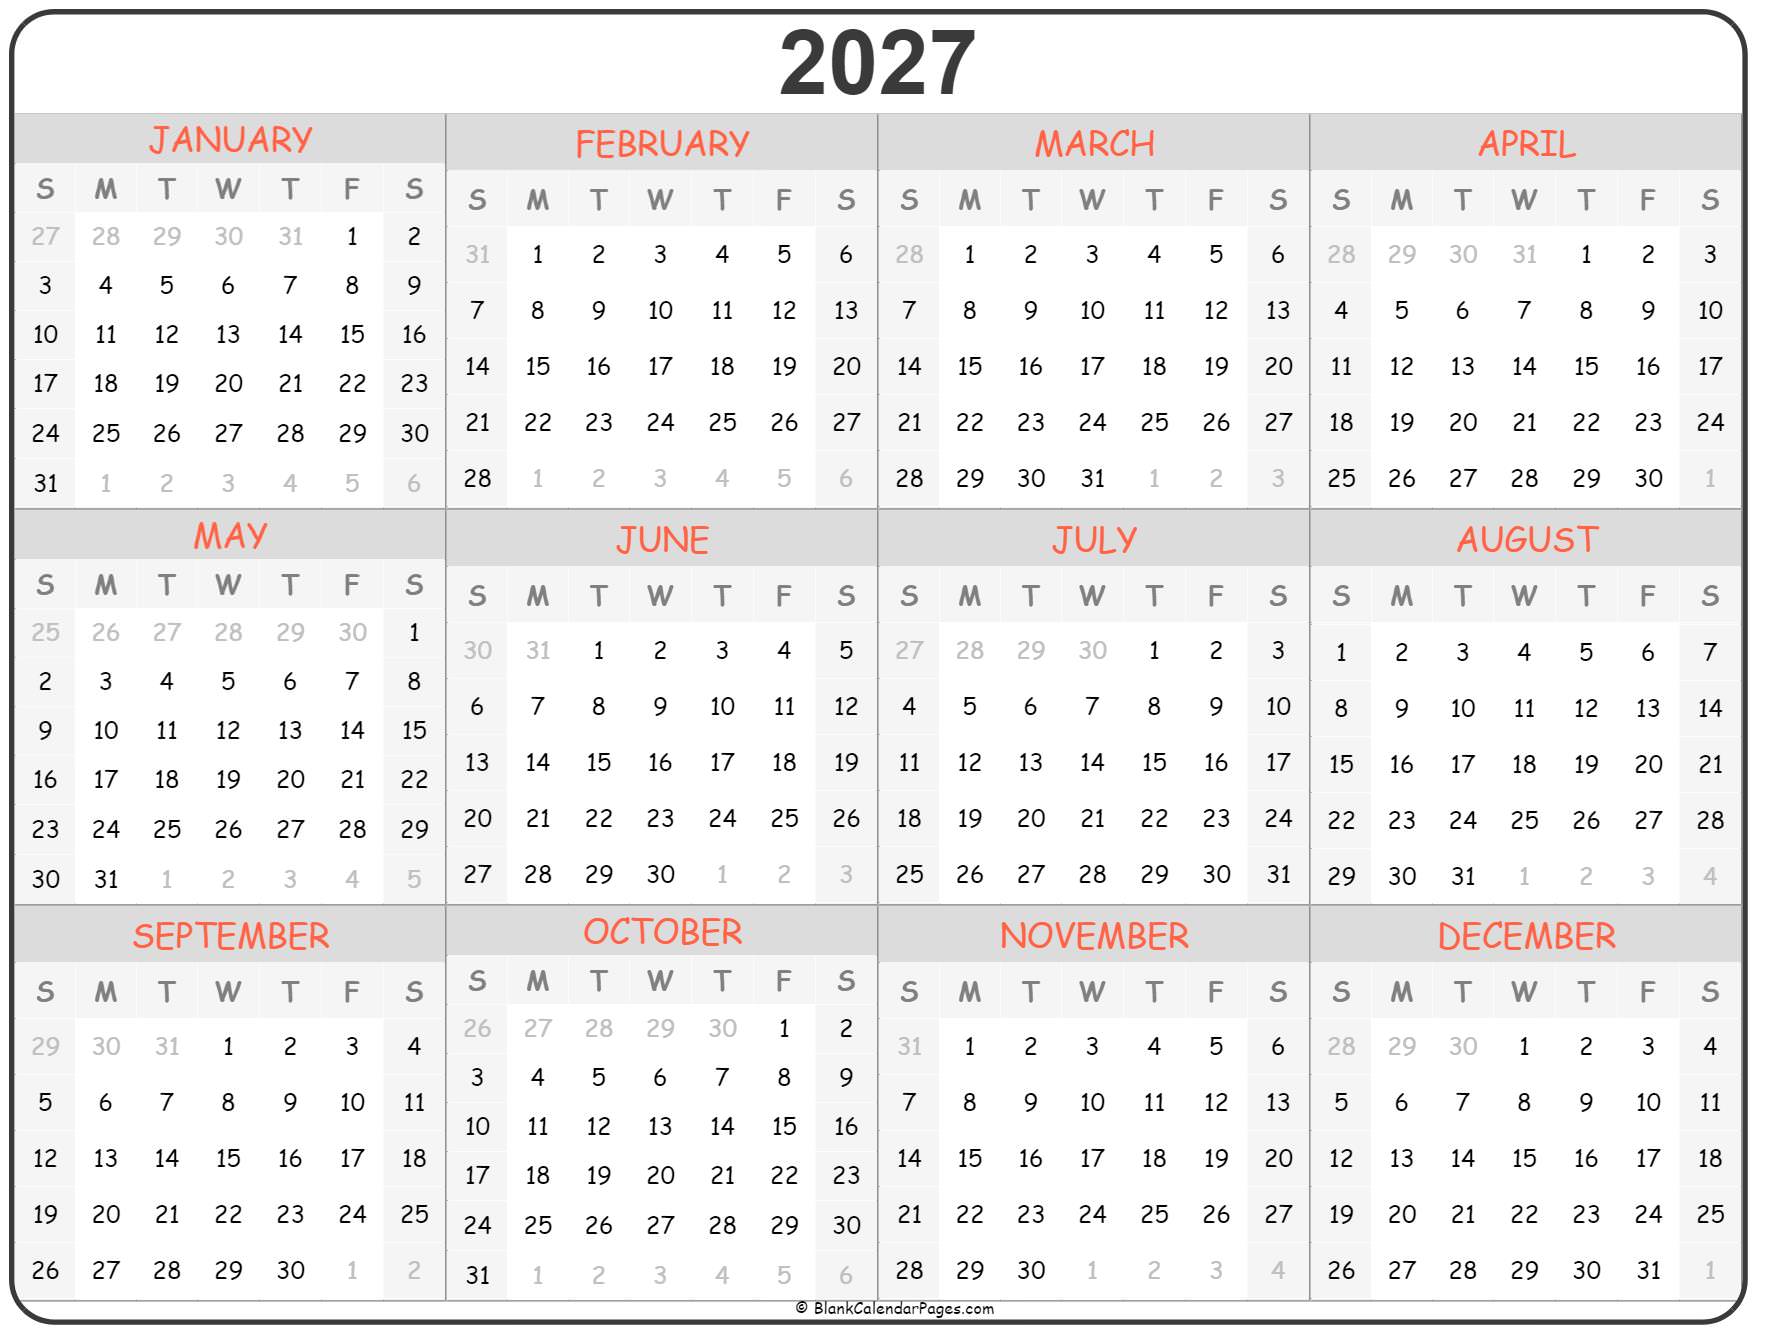 2027-year-calendar-yearly-printable